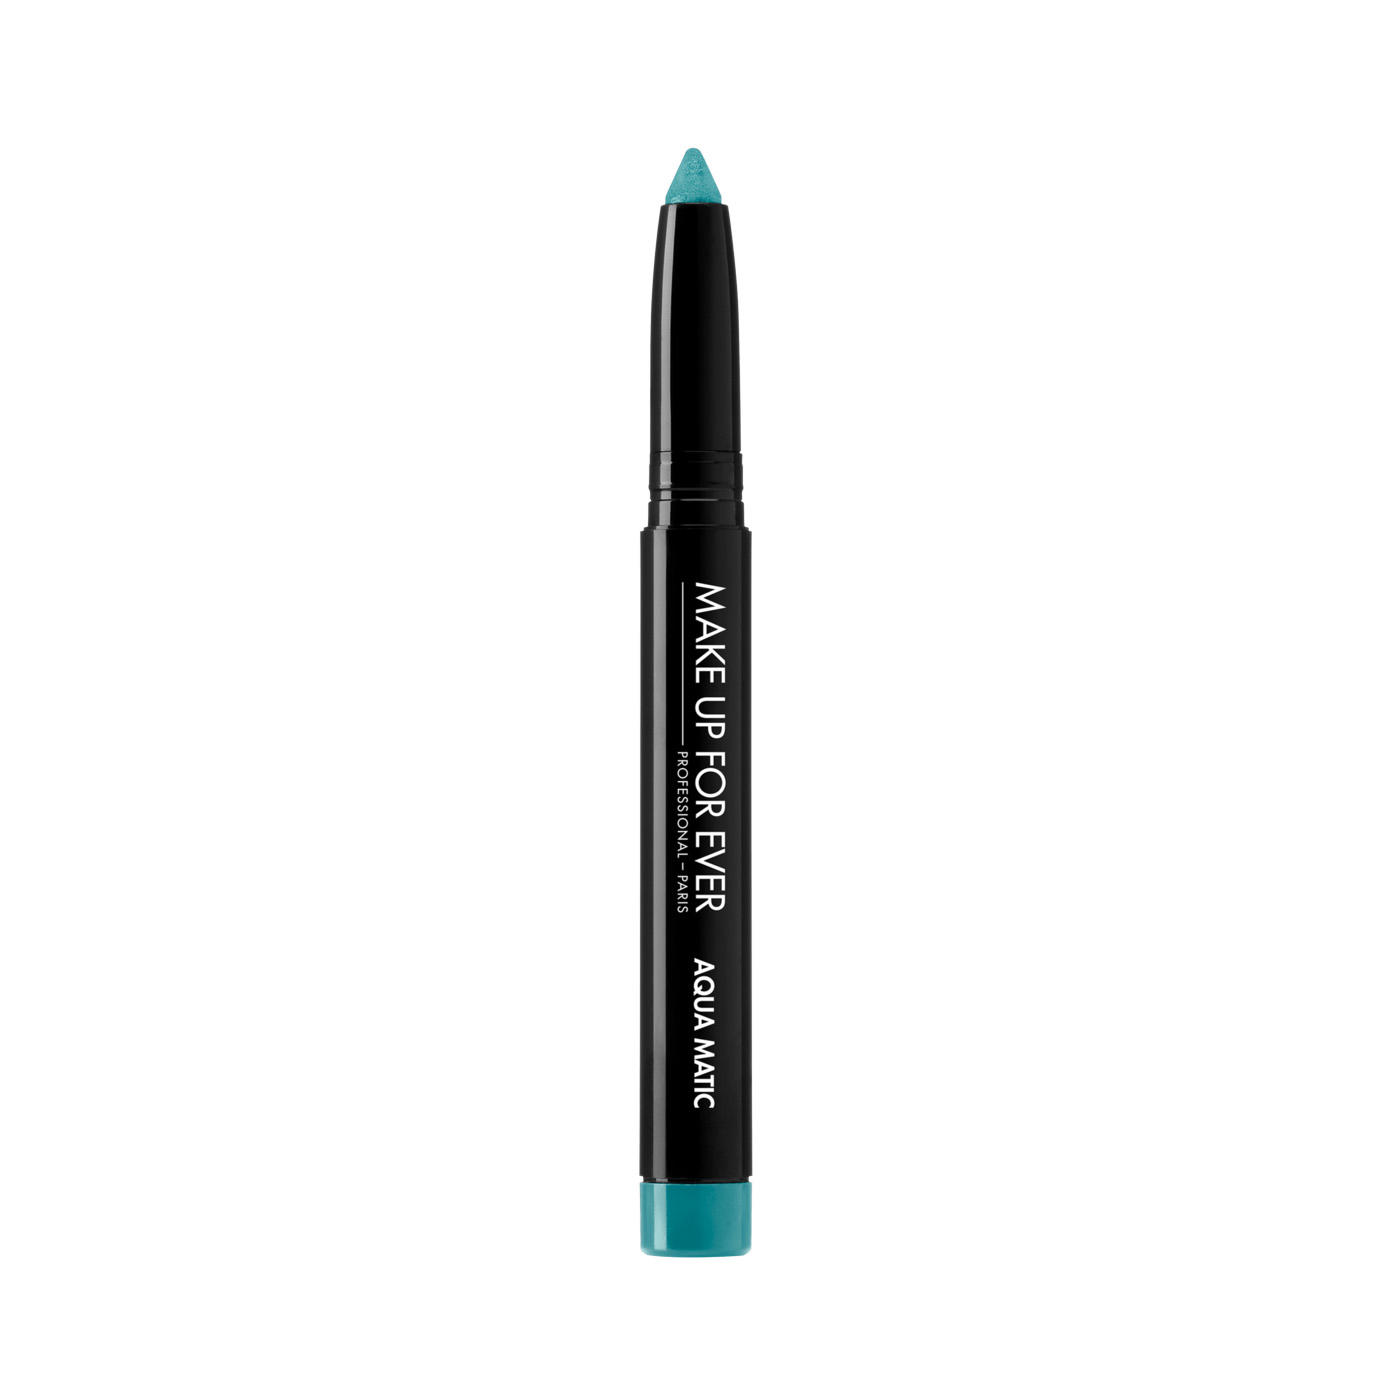 Makeup Forever Aqua Matic Eyeshadow Diamond Light Turquoise D-21